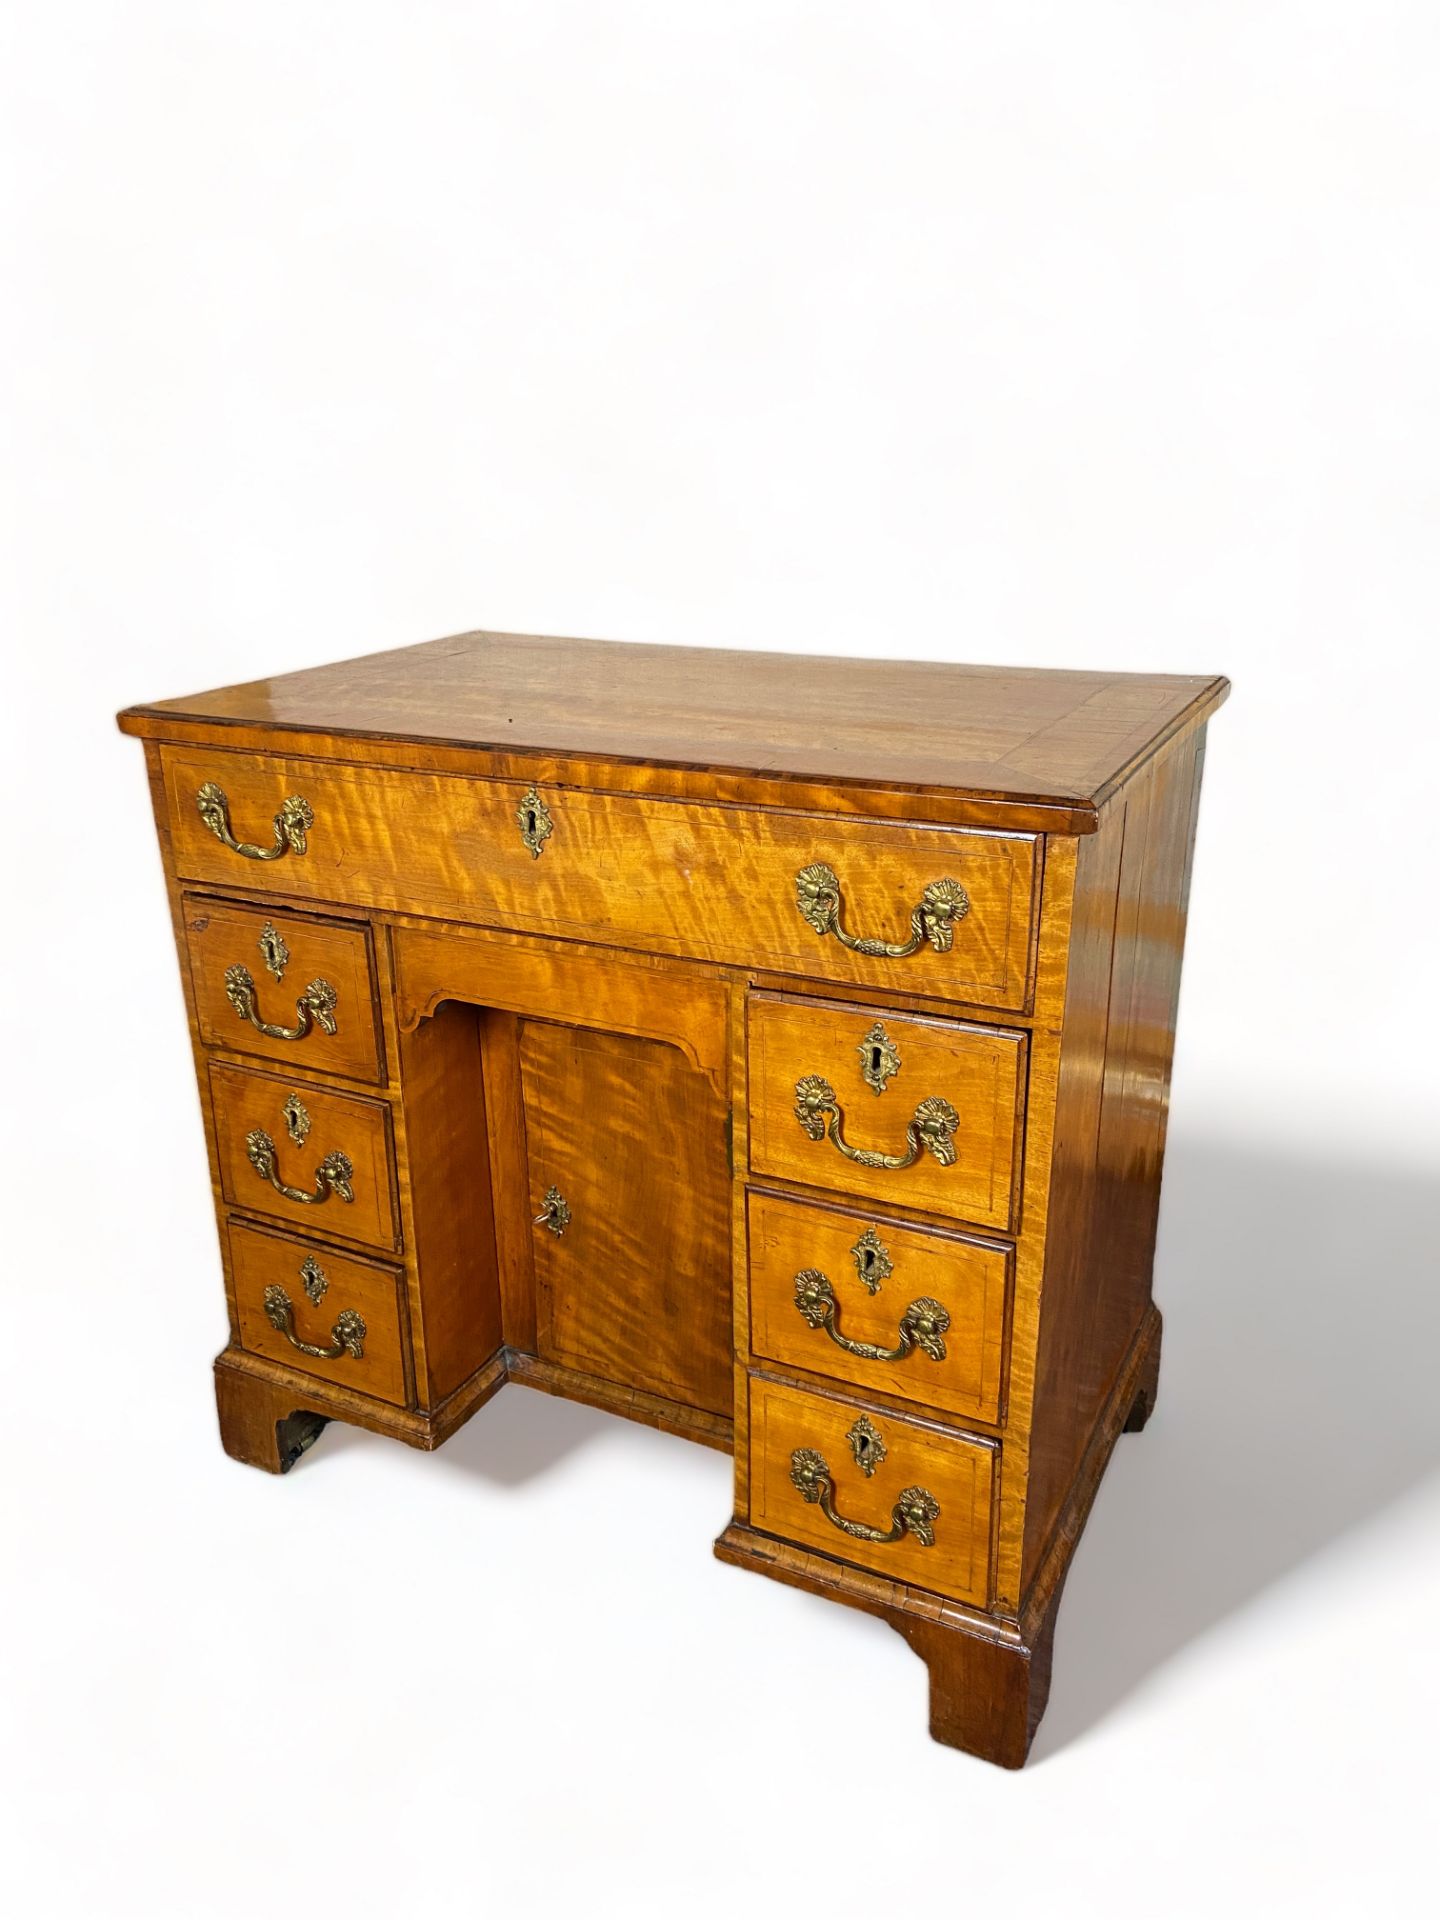 A George III satinwood kneehole desk